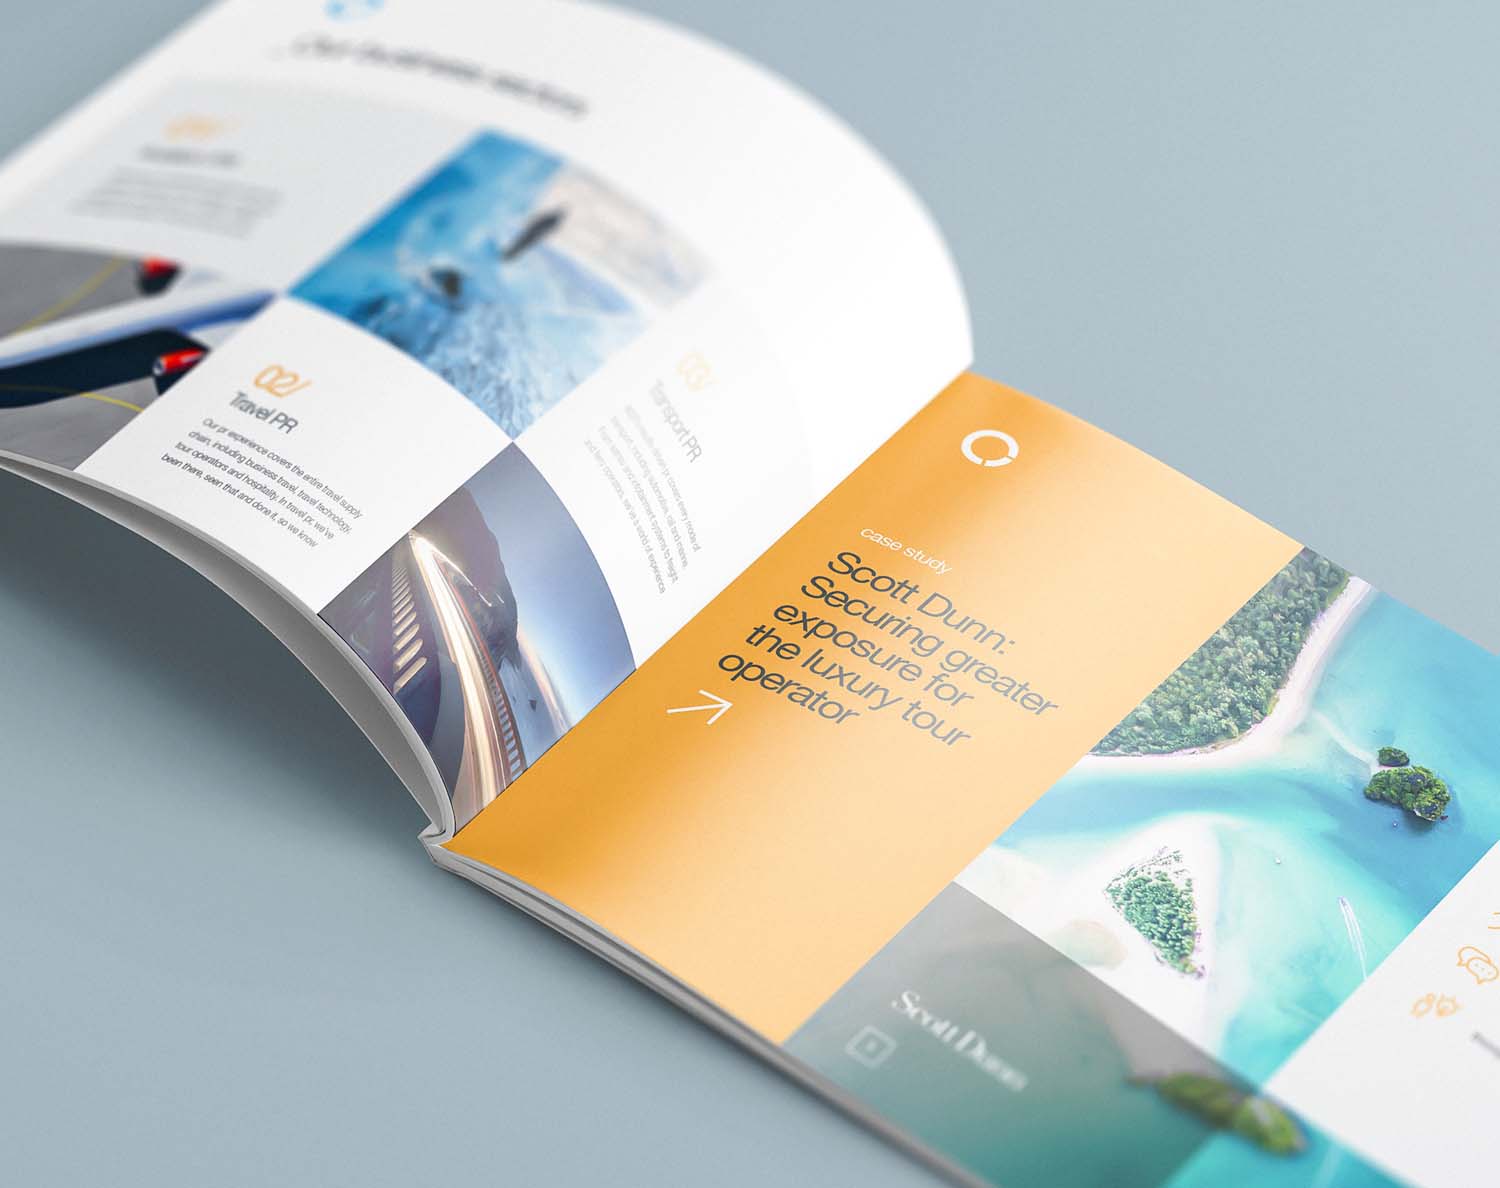 Sales brochure design for travel PR agency 8020 communications designed by Crux Design Agency